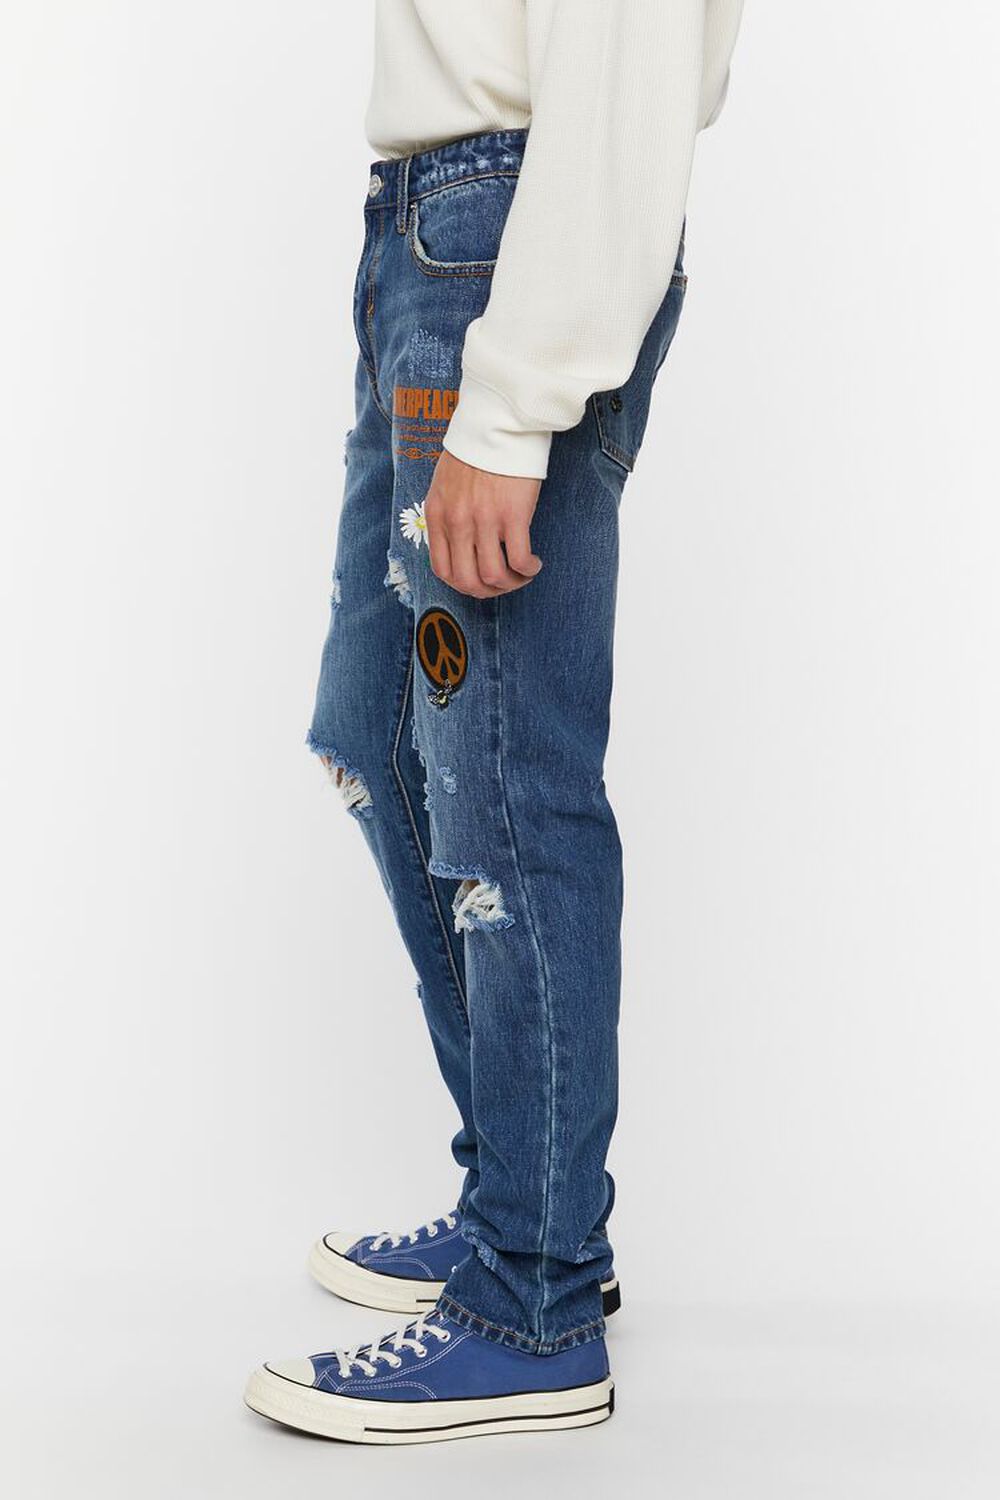 DARK DENIM Slim-Fit Patch Jeans, image 3